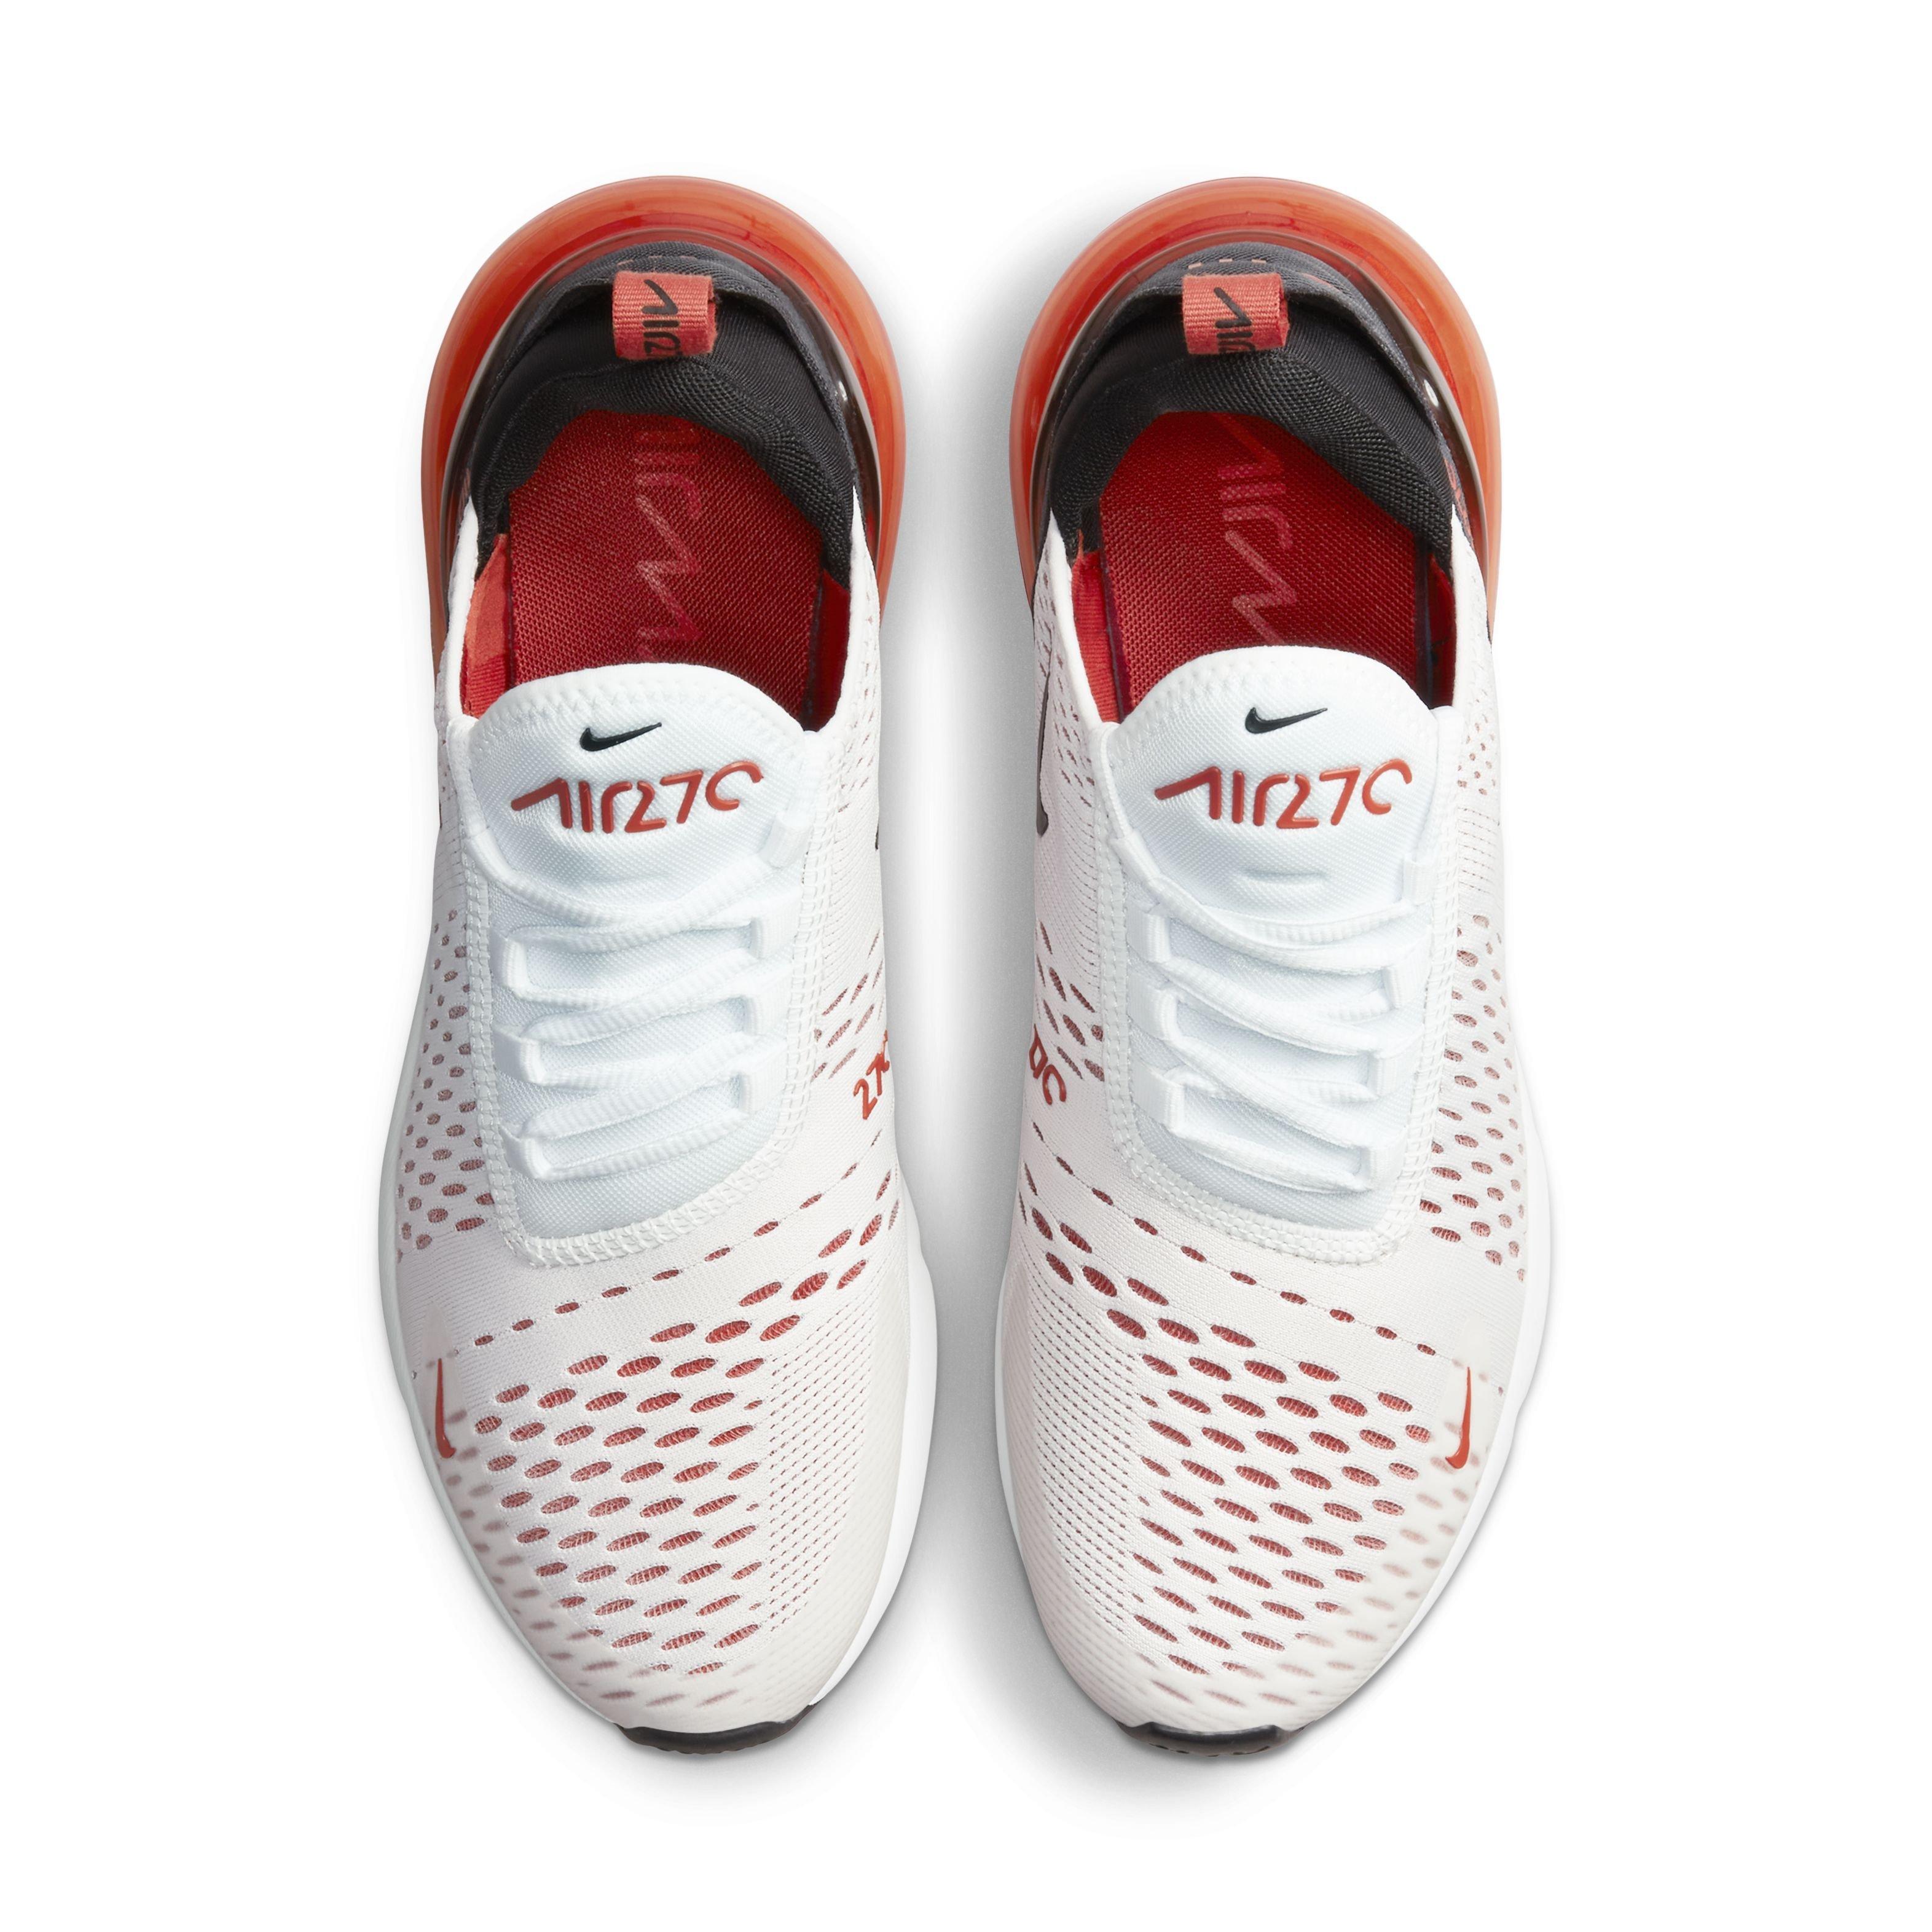 Nike Air 270 "White/Mantra Orange/Cinnabar" Shoe